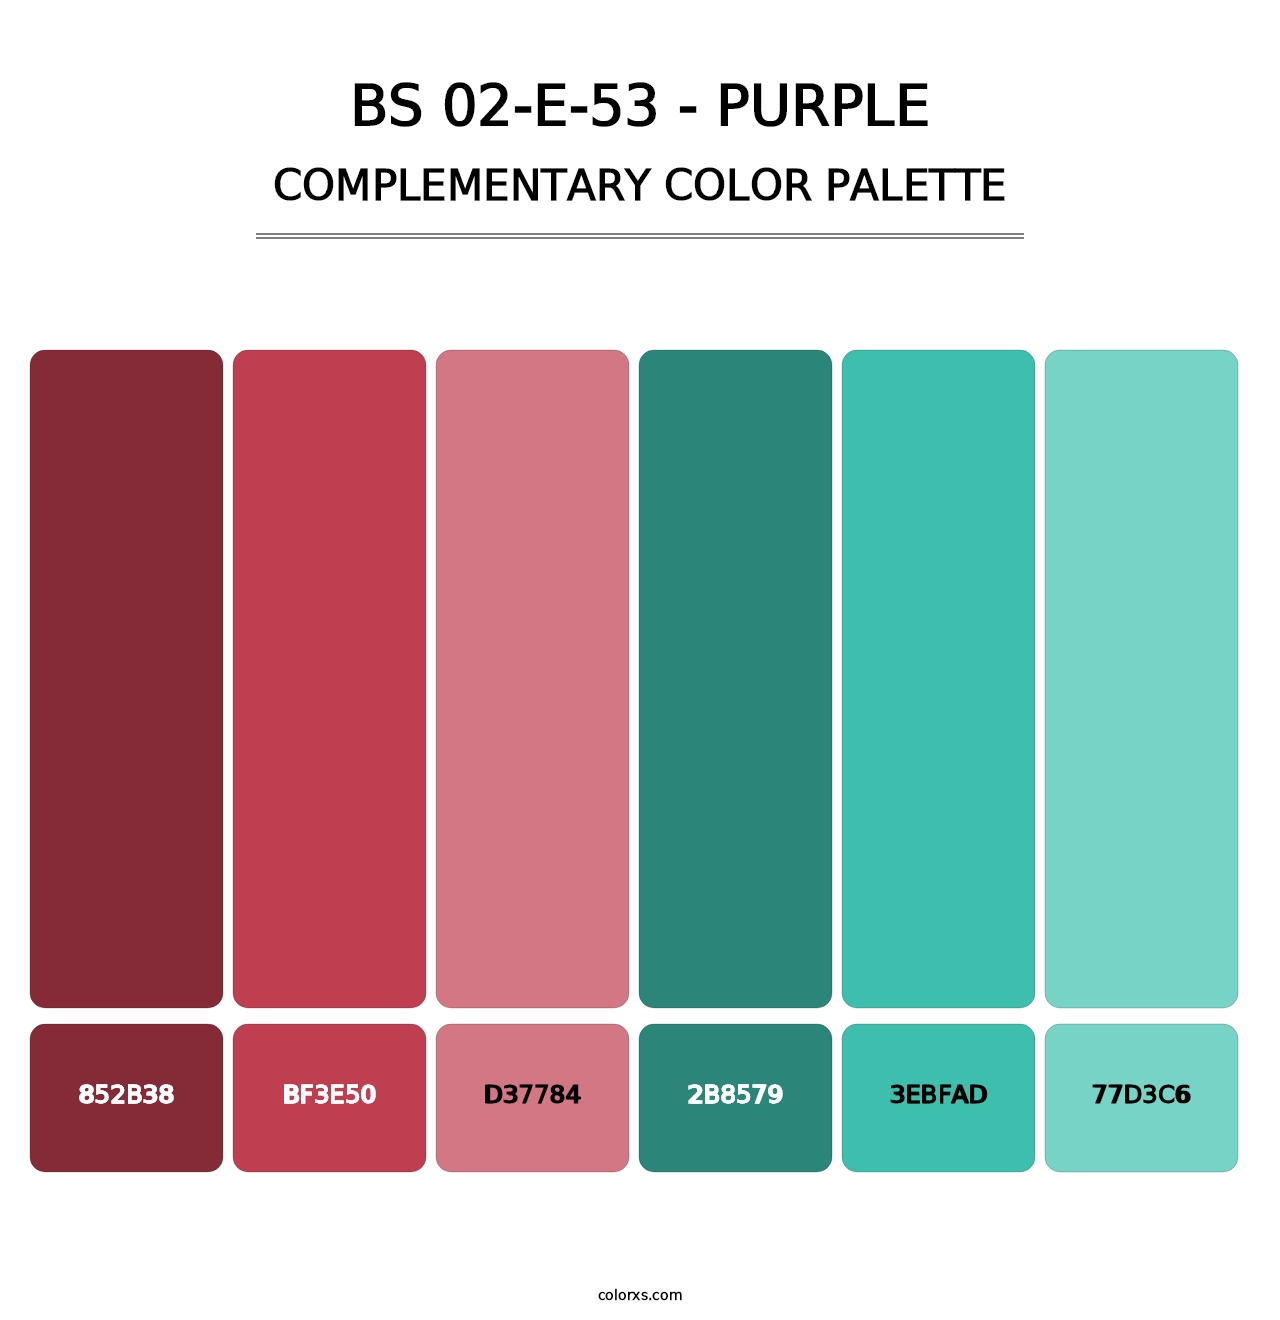 BS 02-E-53 - Purple - Complementary Color Palette